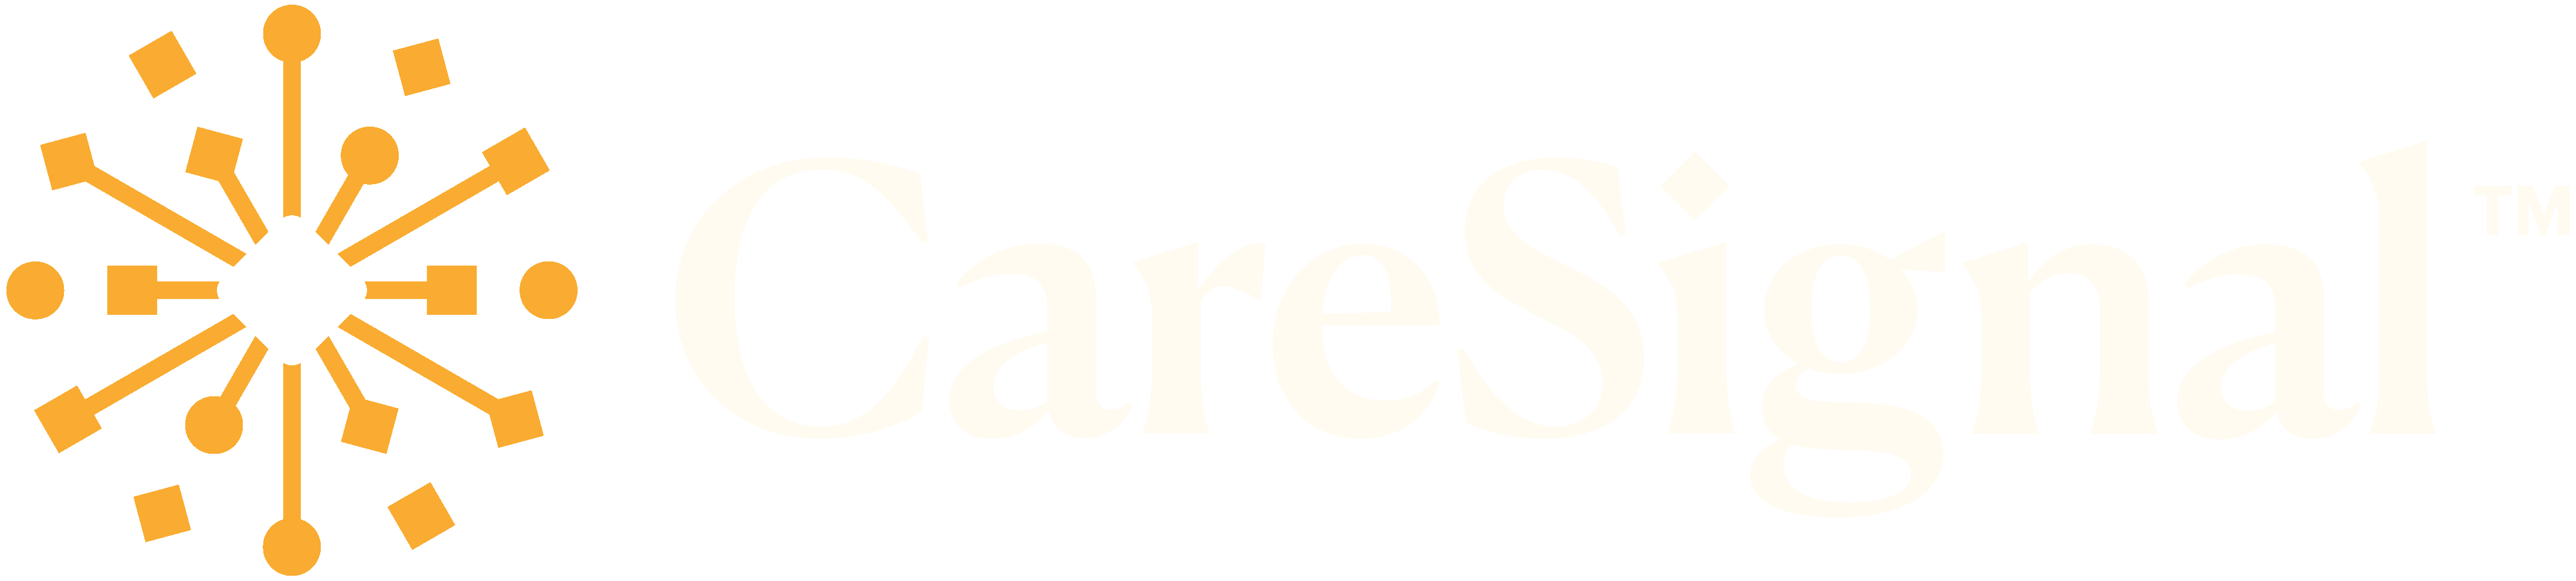 CareSignal Logo, inverse colors.